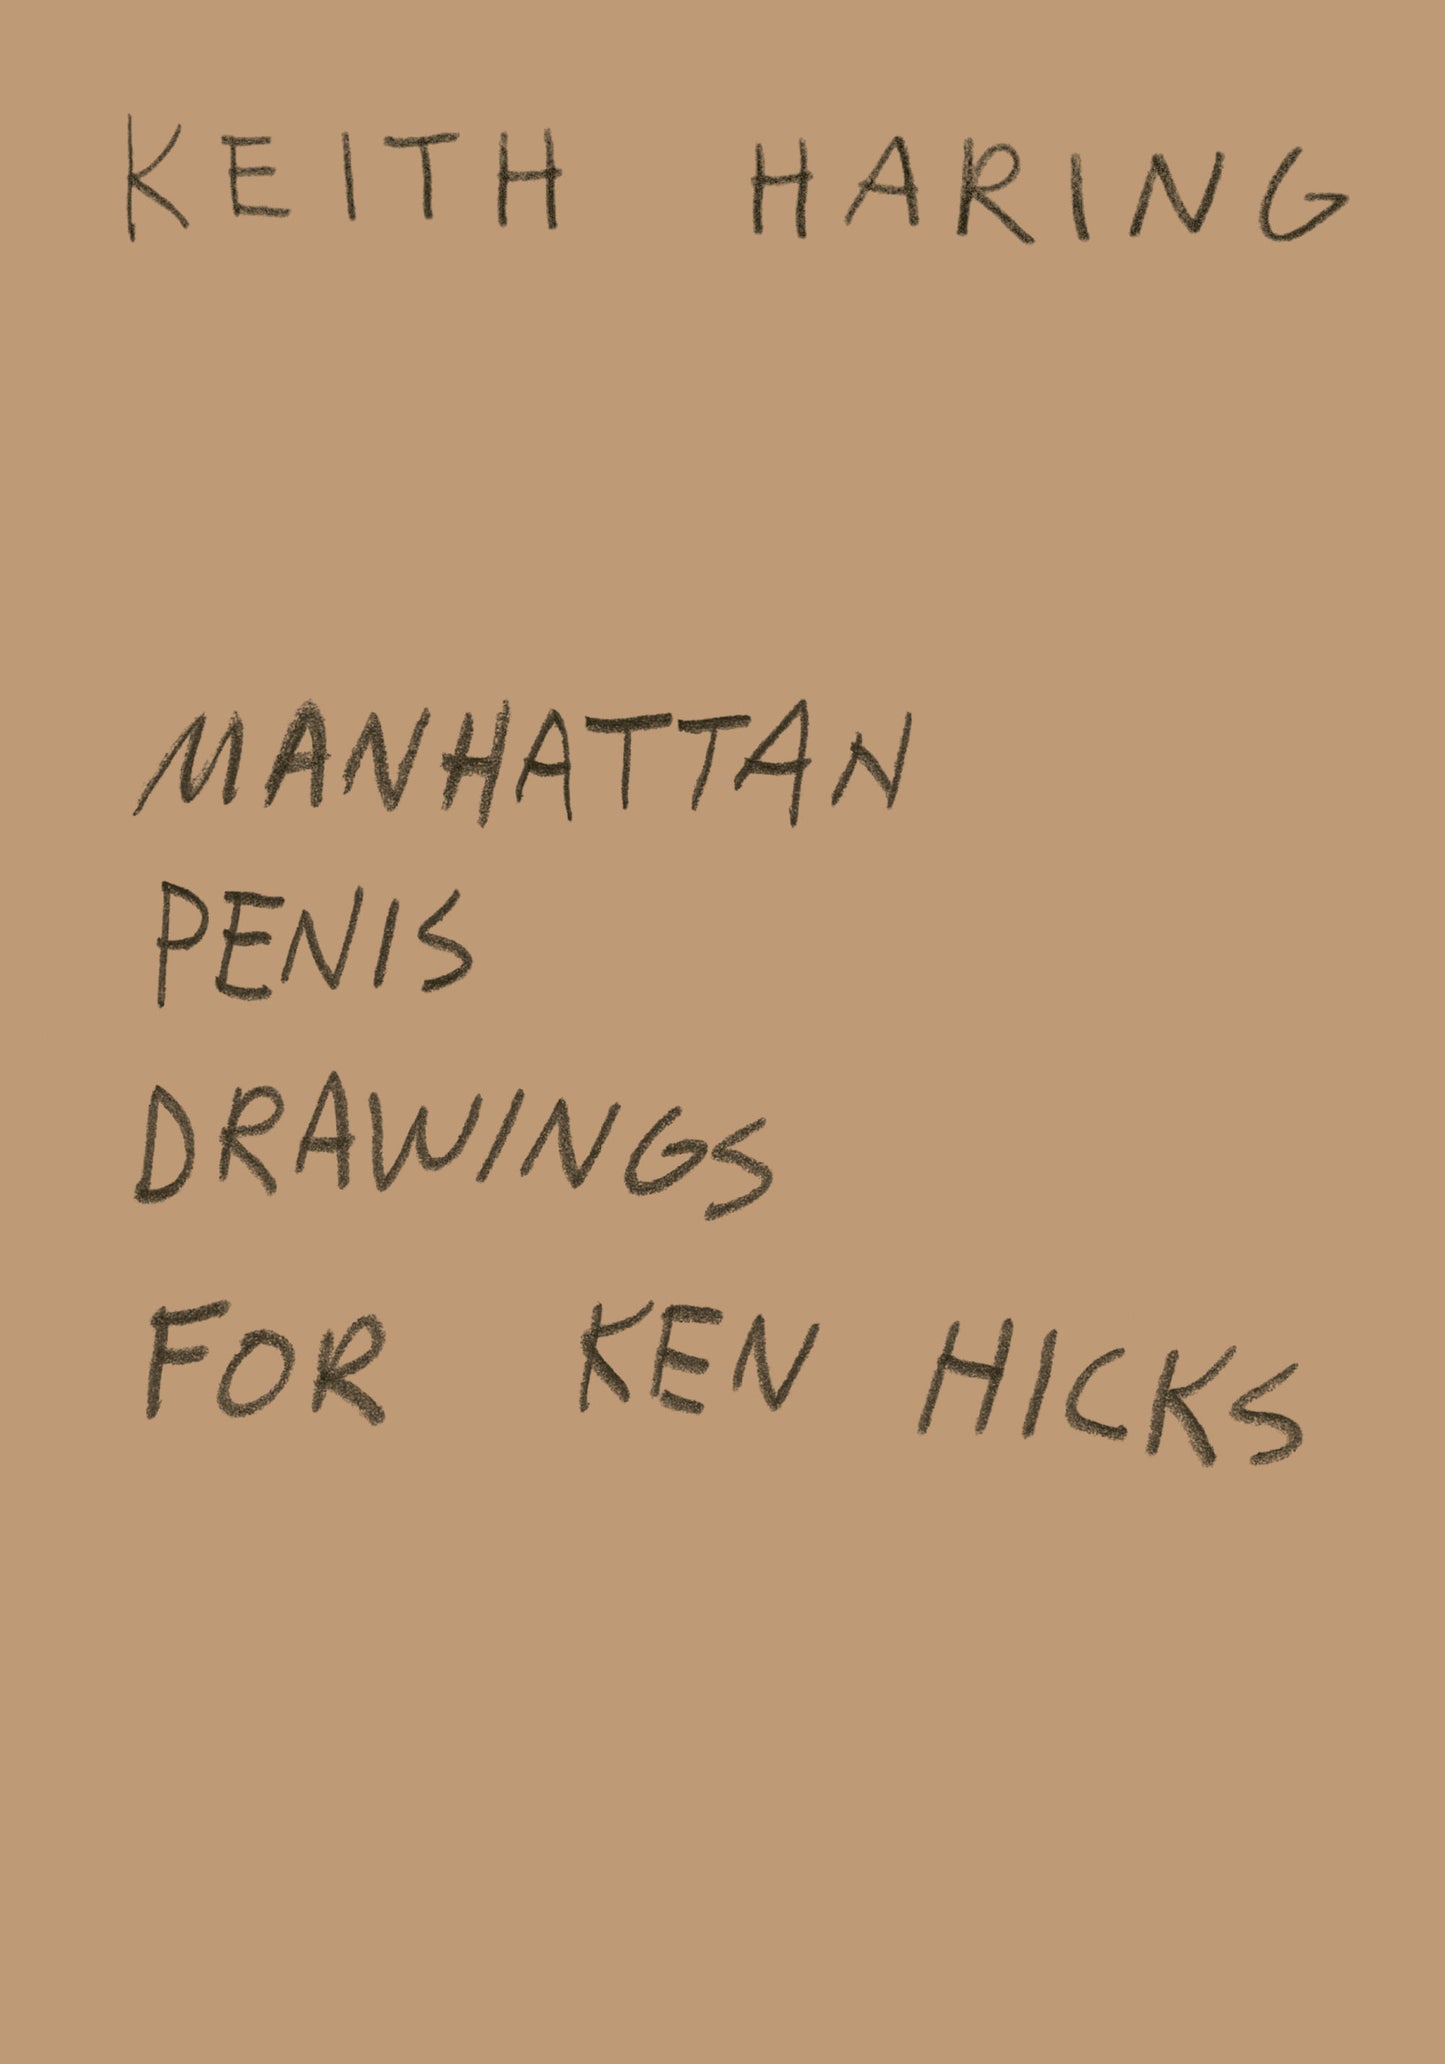 Keith Haring - Manhattan Penis Drawings for Ken Hicks